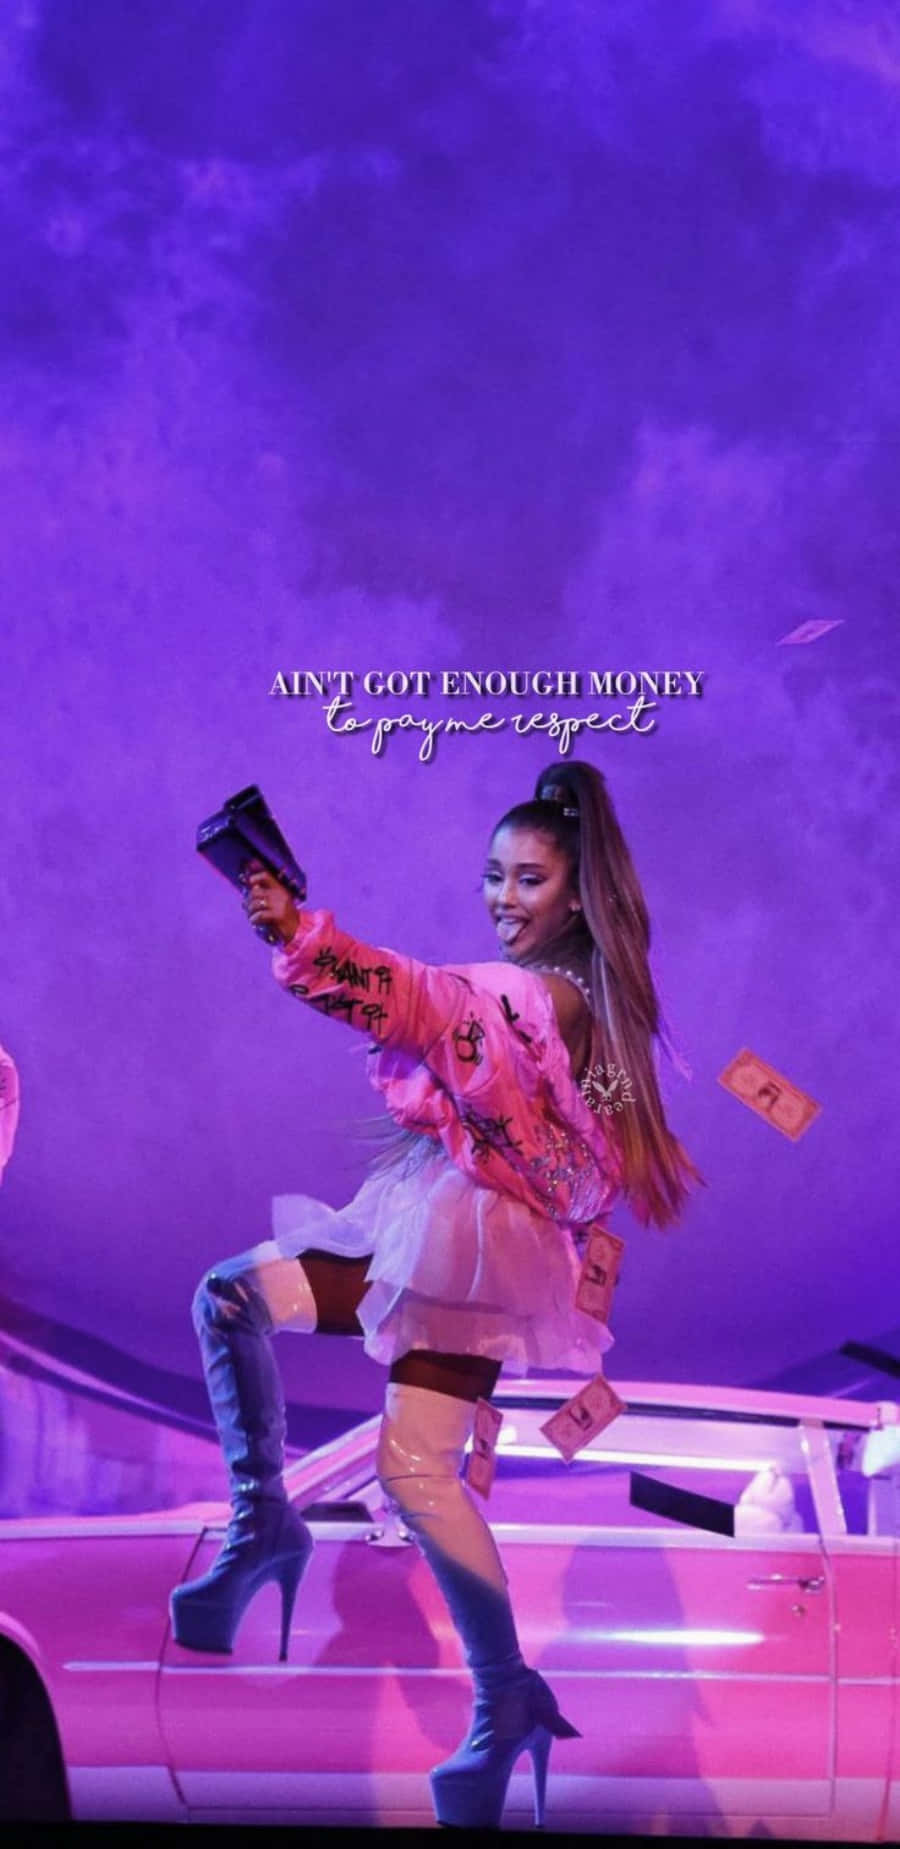 Download Sweetener World Tour Ariana Grande 7 Rings Wallpaper